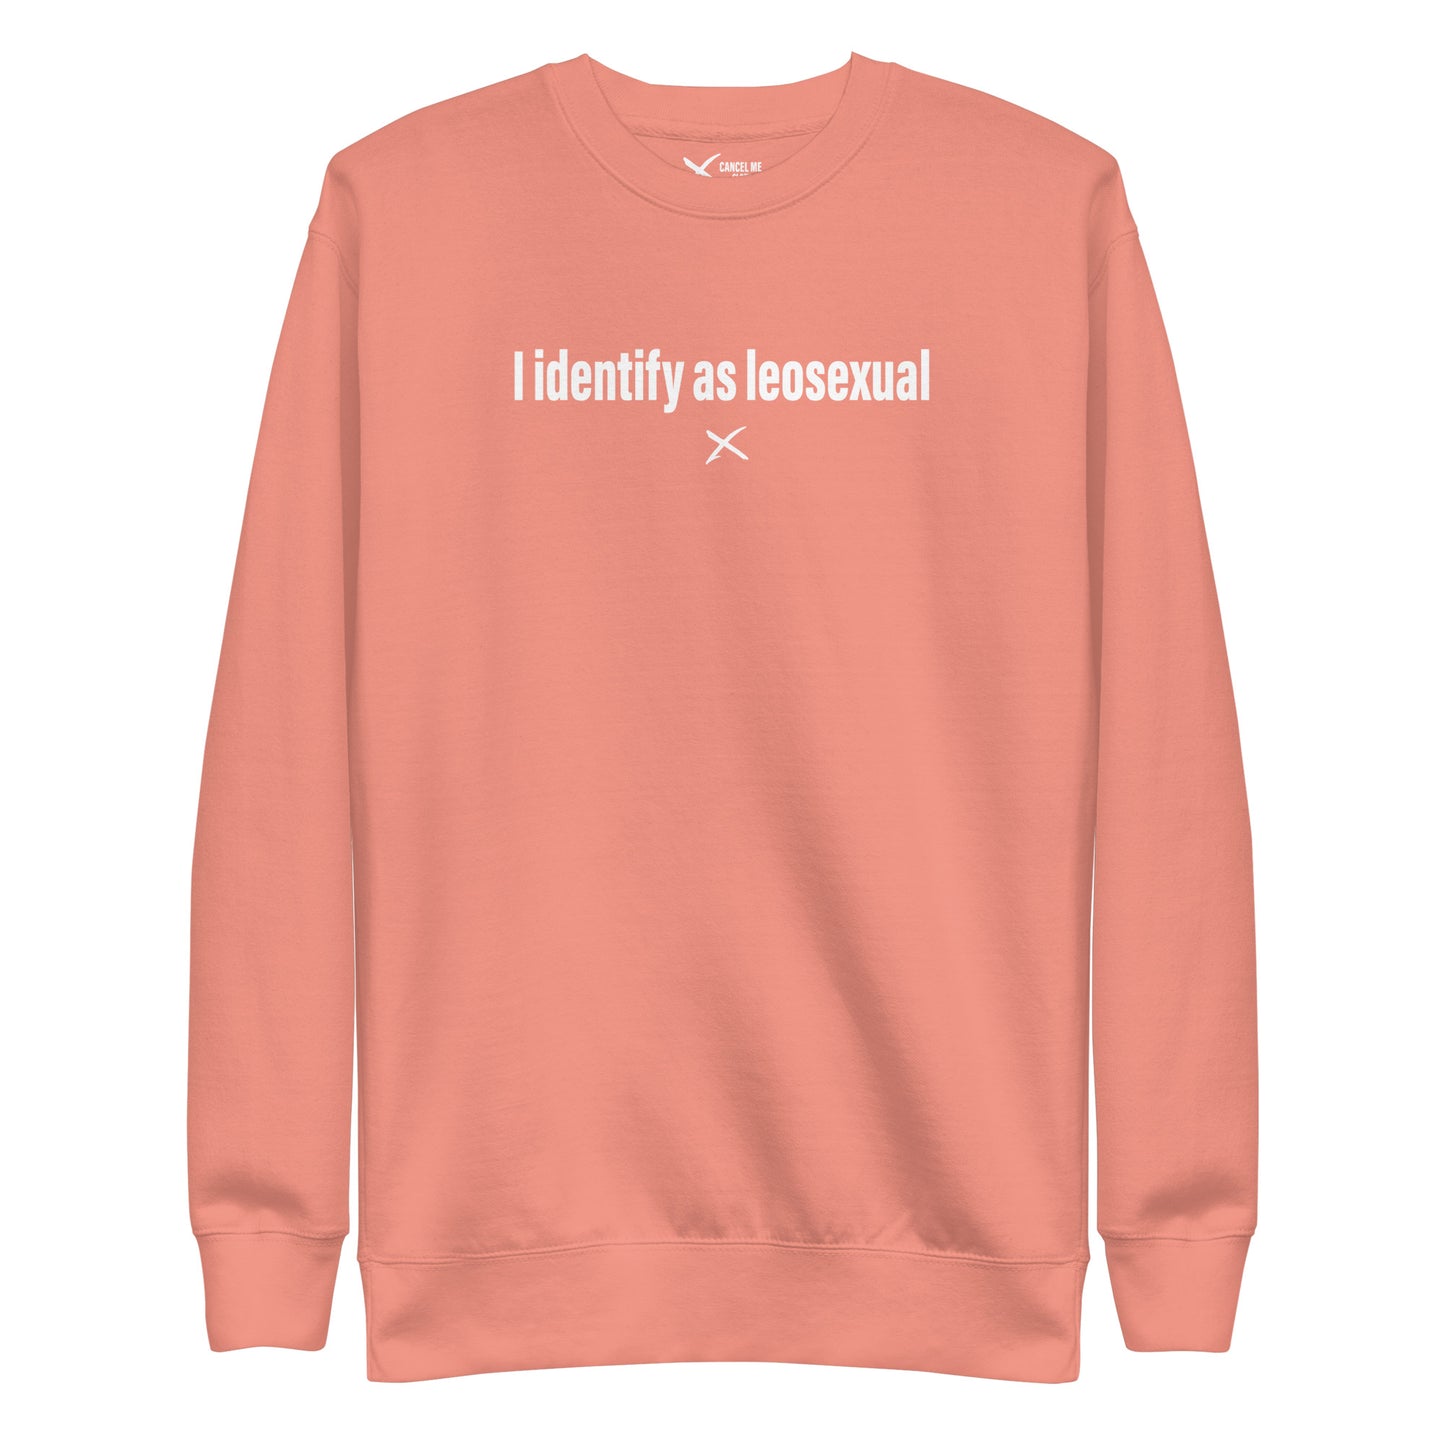 I identify as leosexual - Sweatshirt